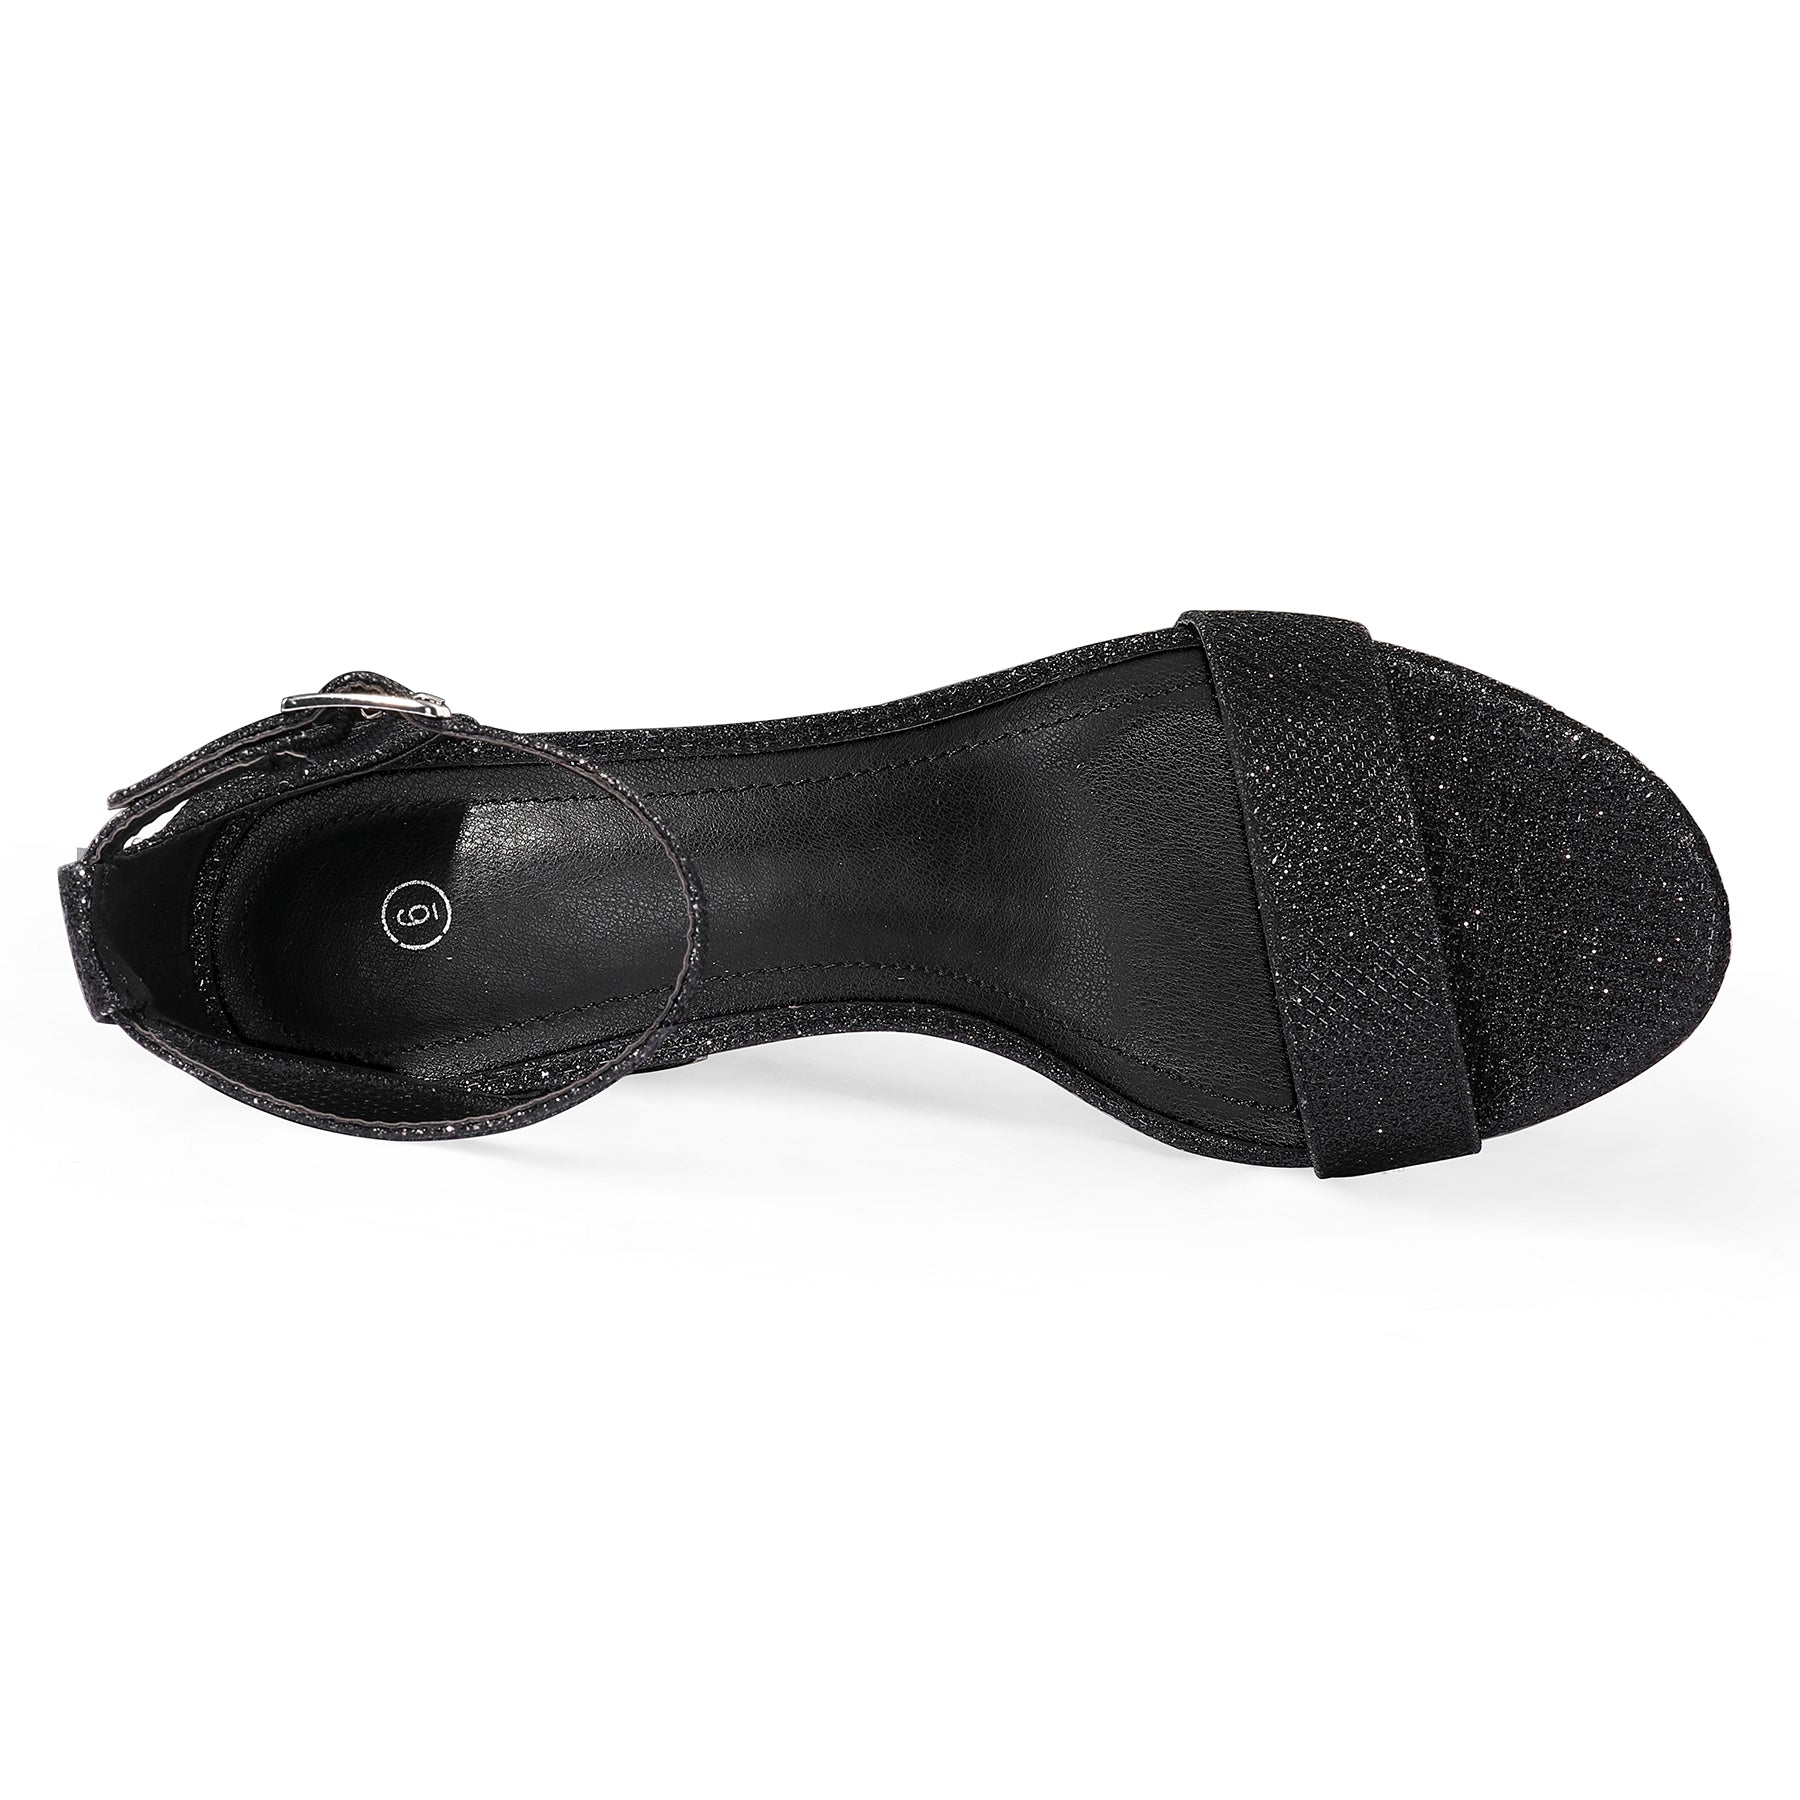 Black Glitter Open Toe Ankle Strap Block Heel Sandals - MYSOFT